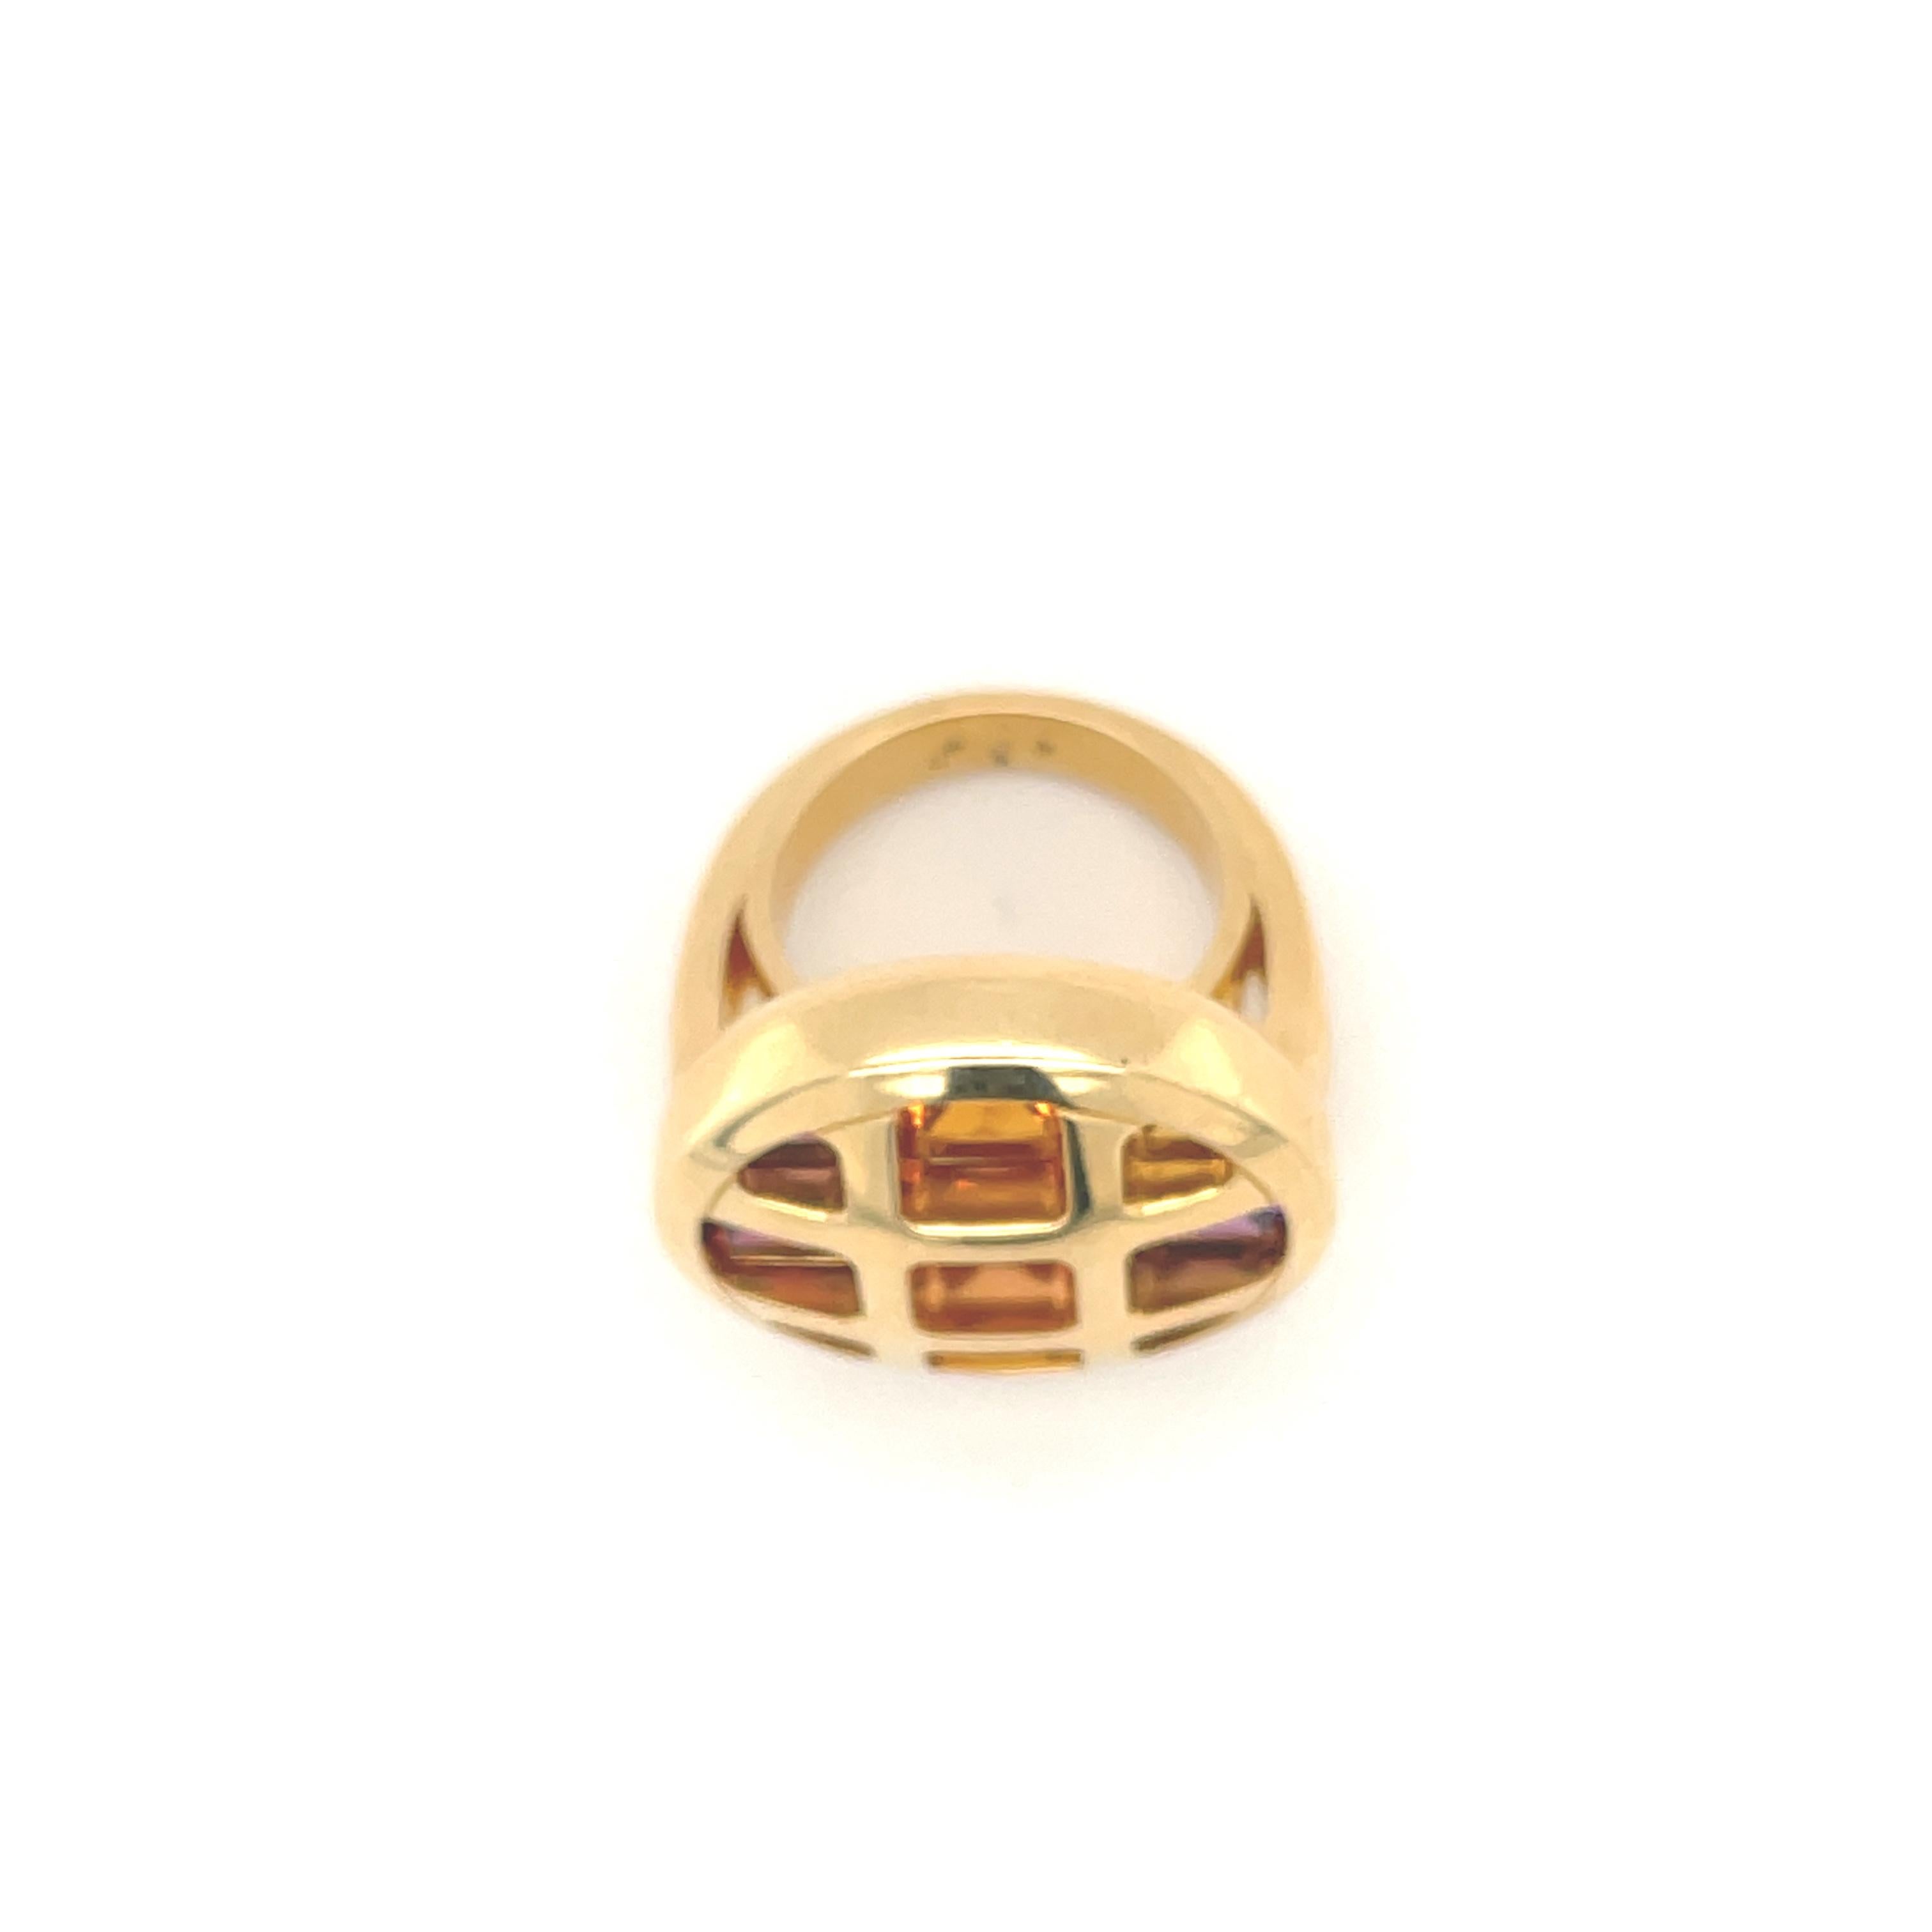 Cartier 18K Yellow Gold Pasha Gemstone Ring.  Size 5.25.  Multi Stone. Stamped Cartier 750